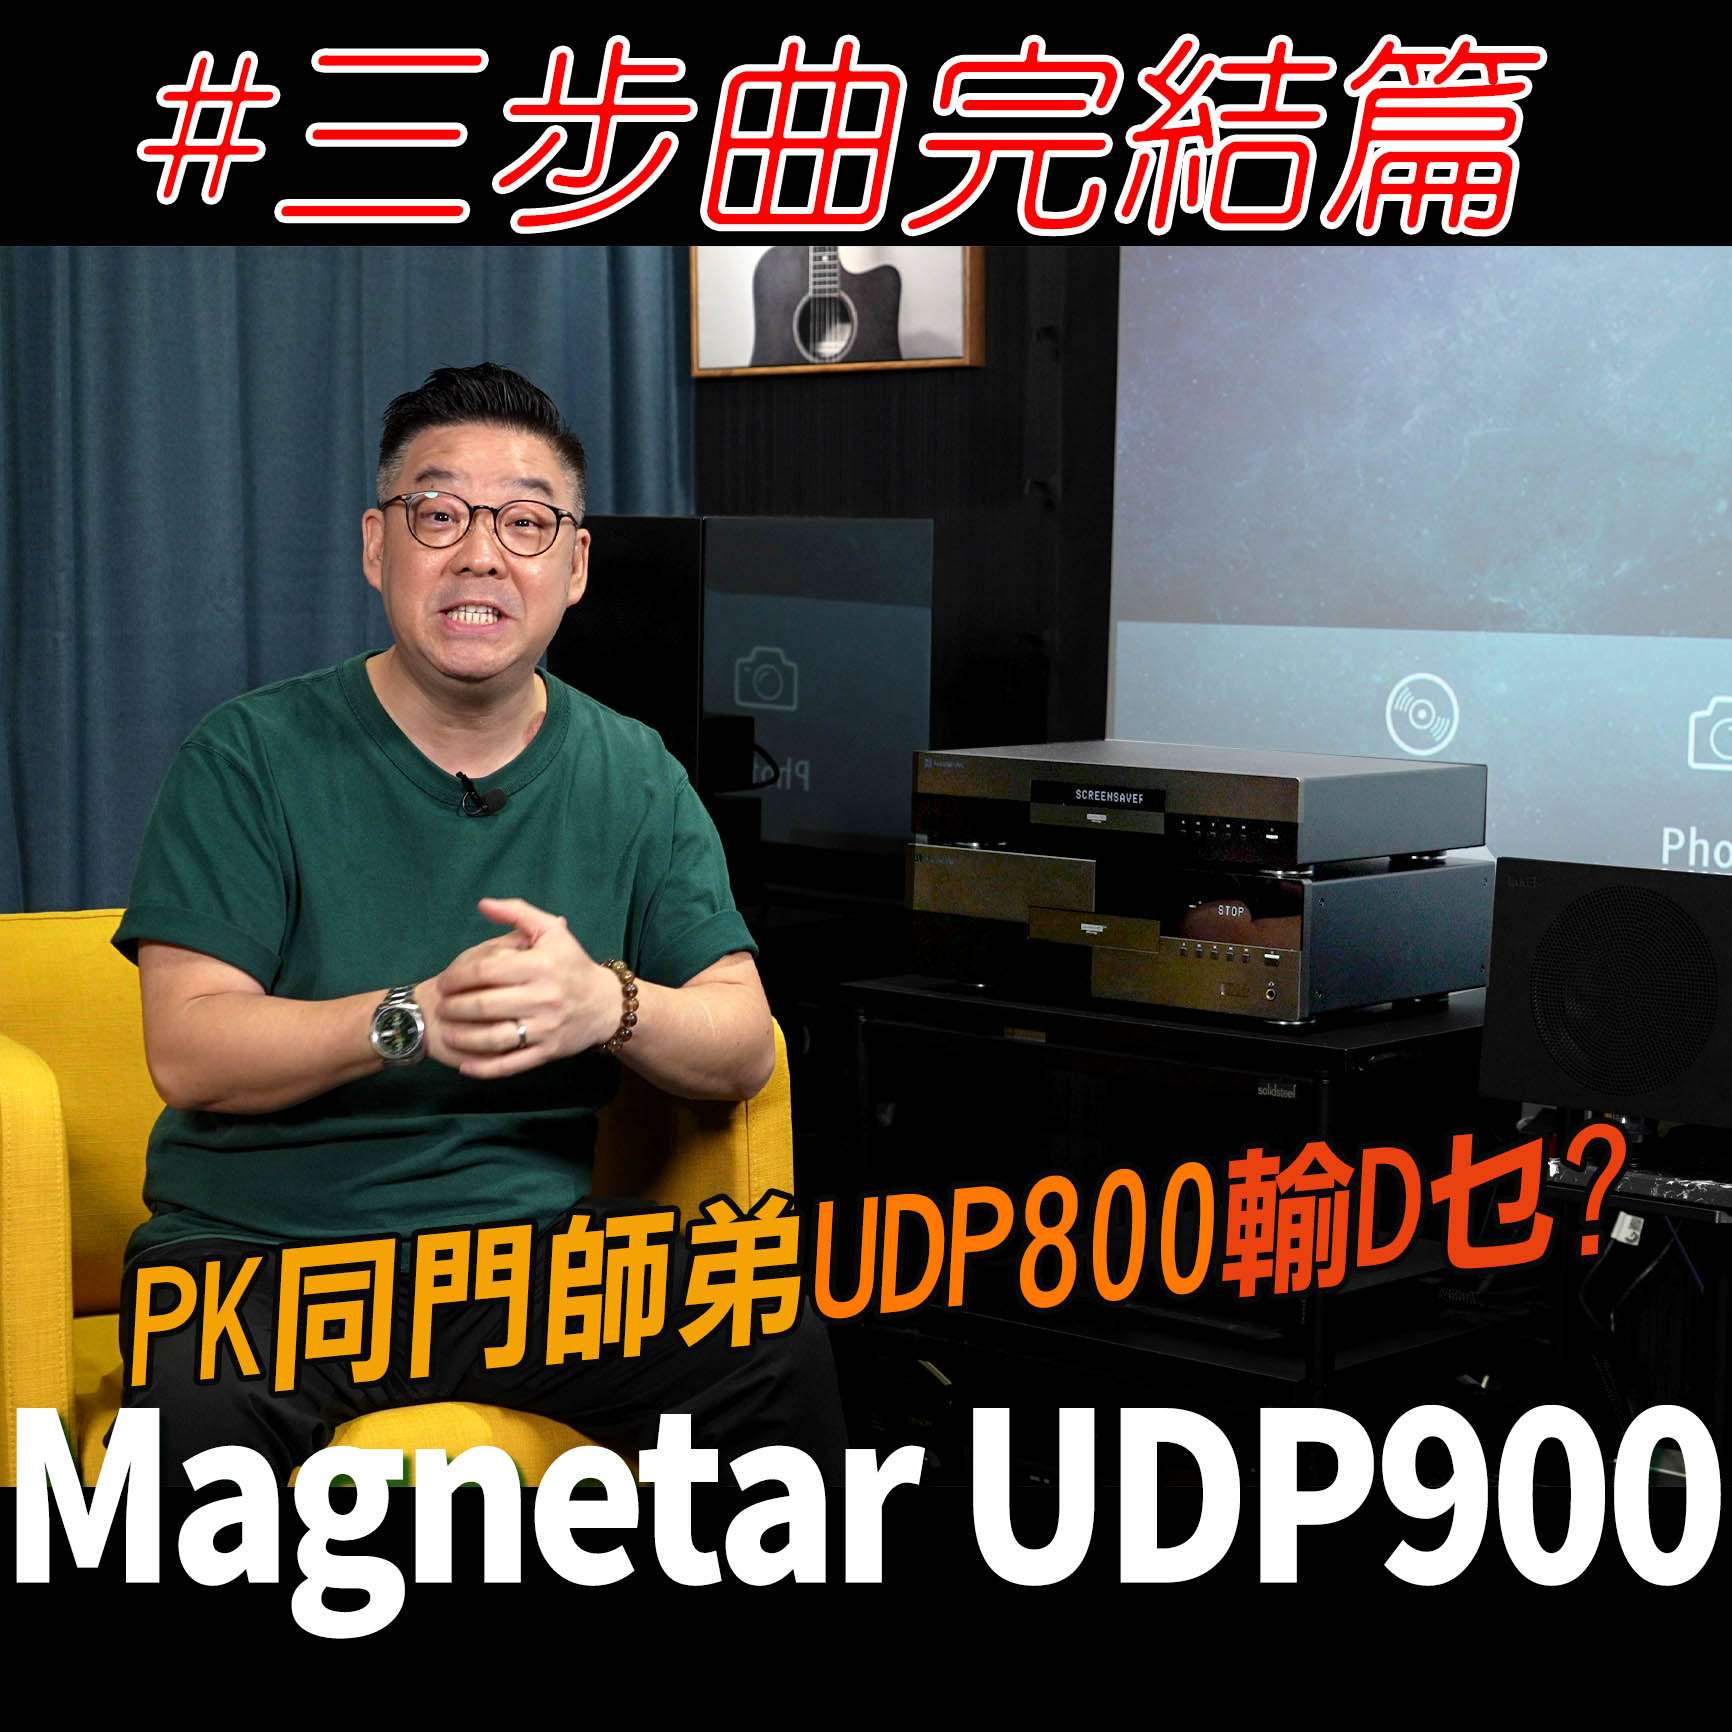 Magnetar UDP900 unbox IG ep3 copy.jpg